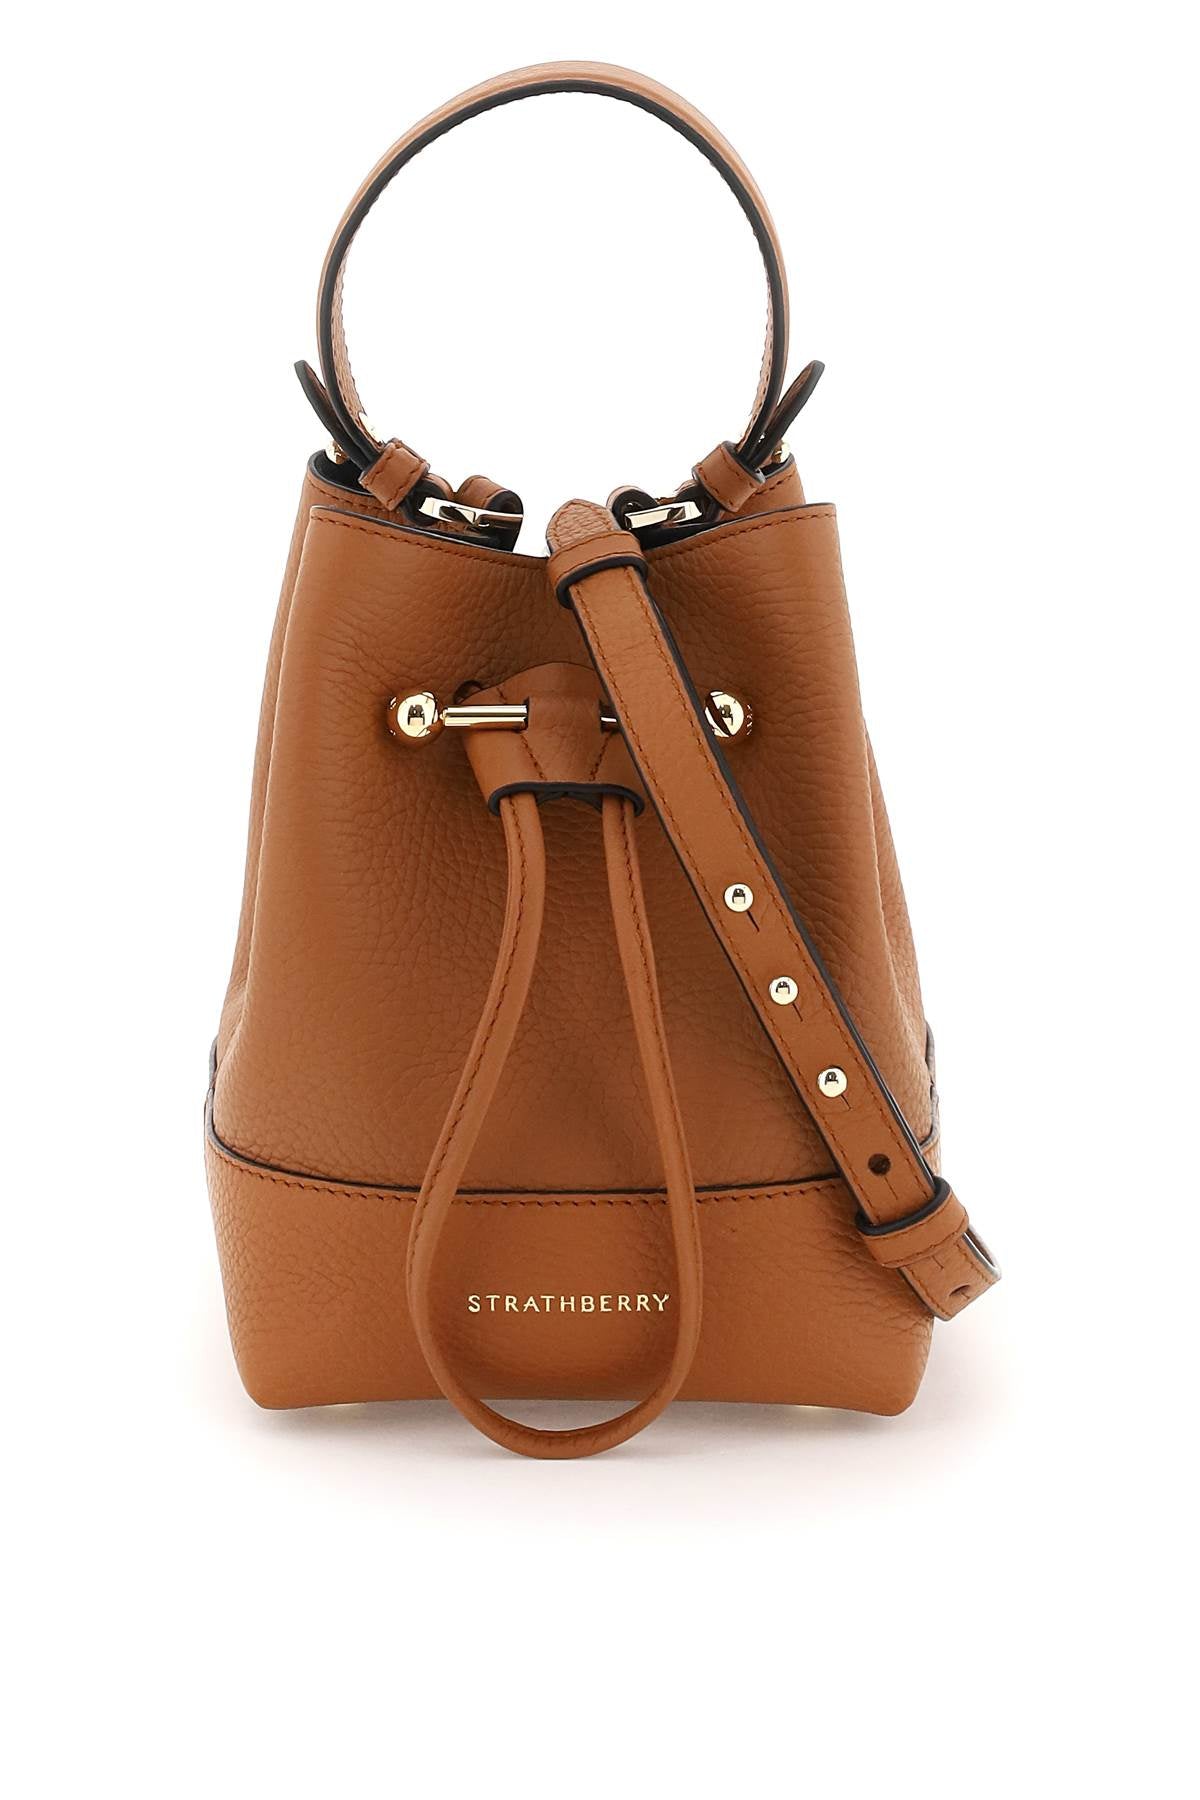 STRATHBERRY Lana Osette Leather Bucket Hobo Bag